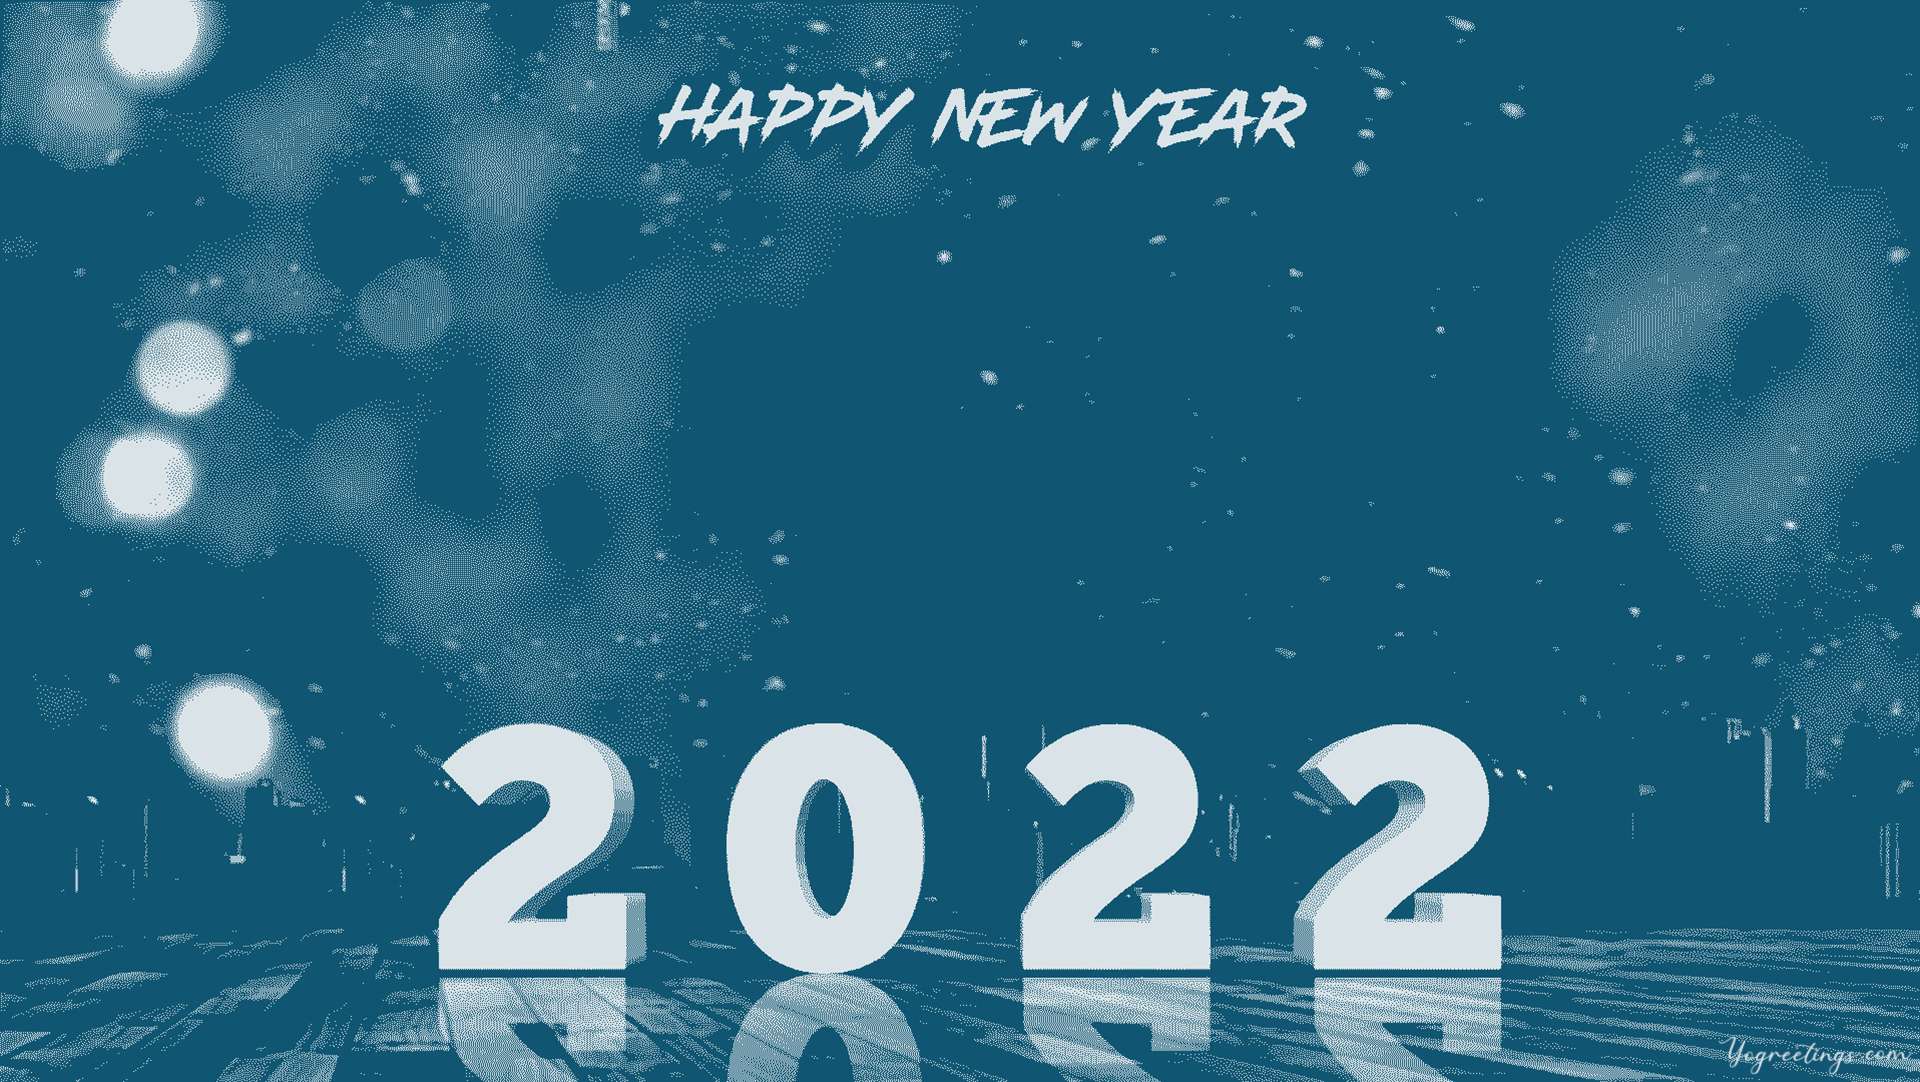 Beautiful happy new year wallpaper 2022 full hd